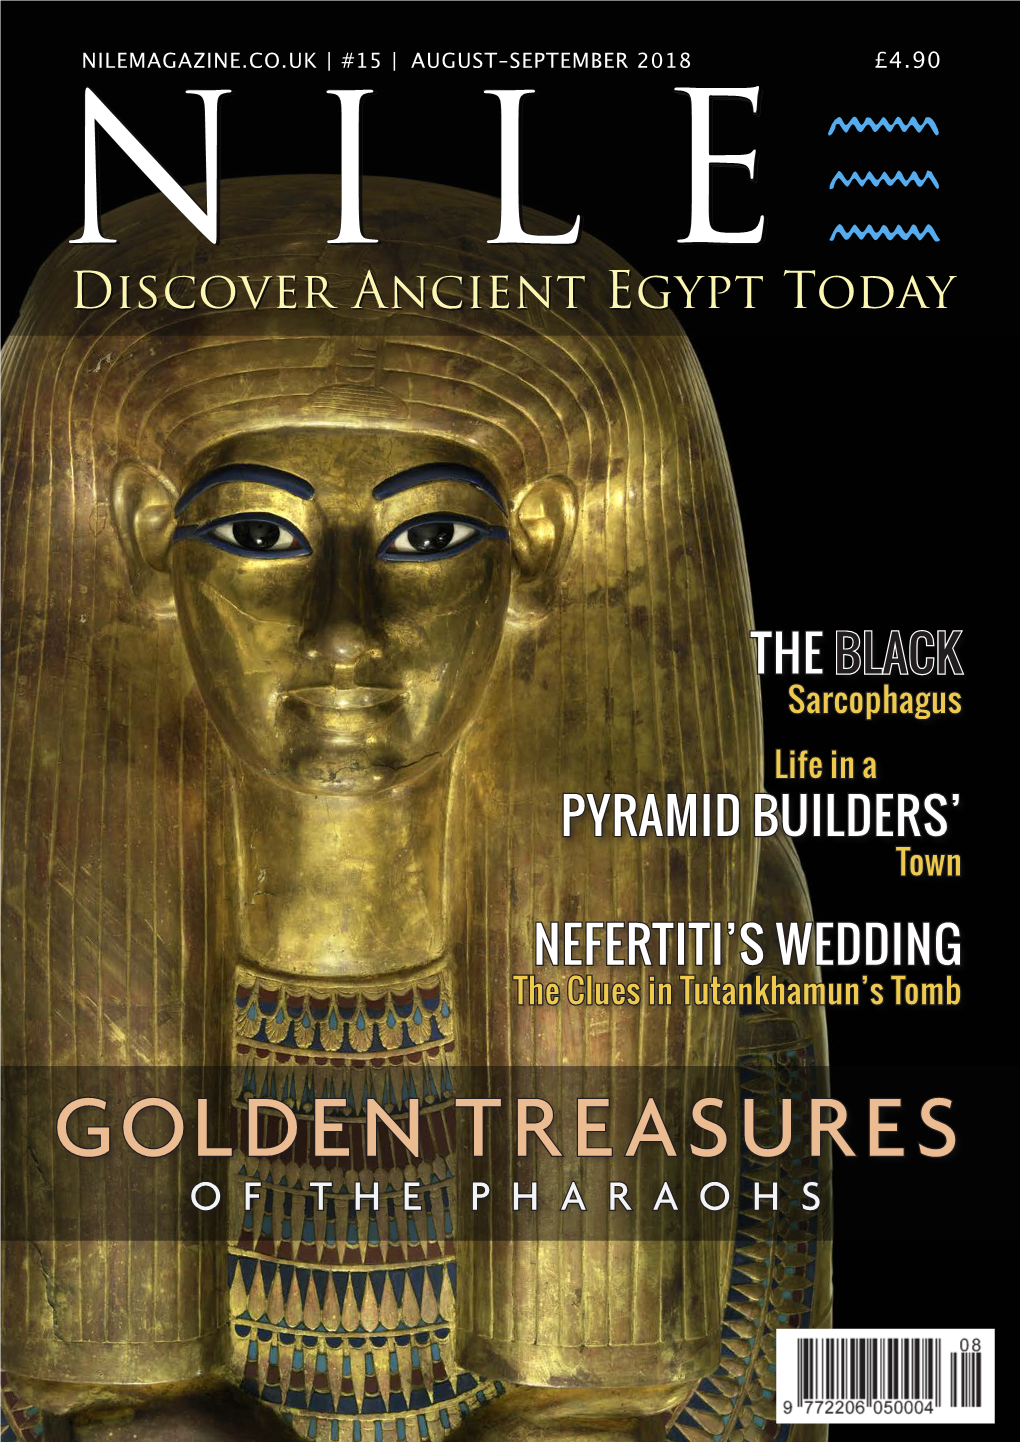 Golden Treasures of the Pharaohs Nile